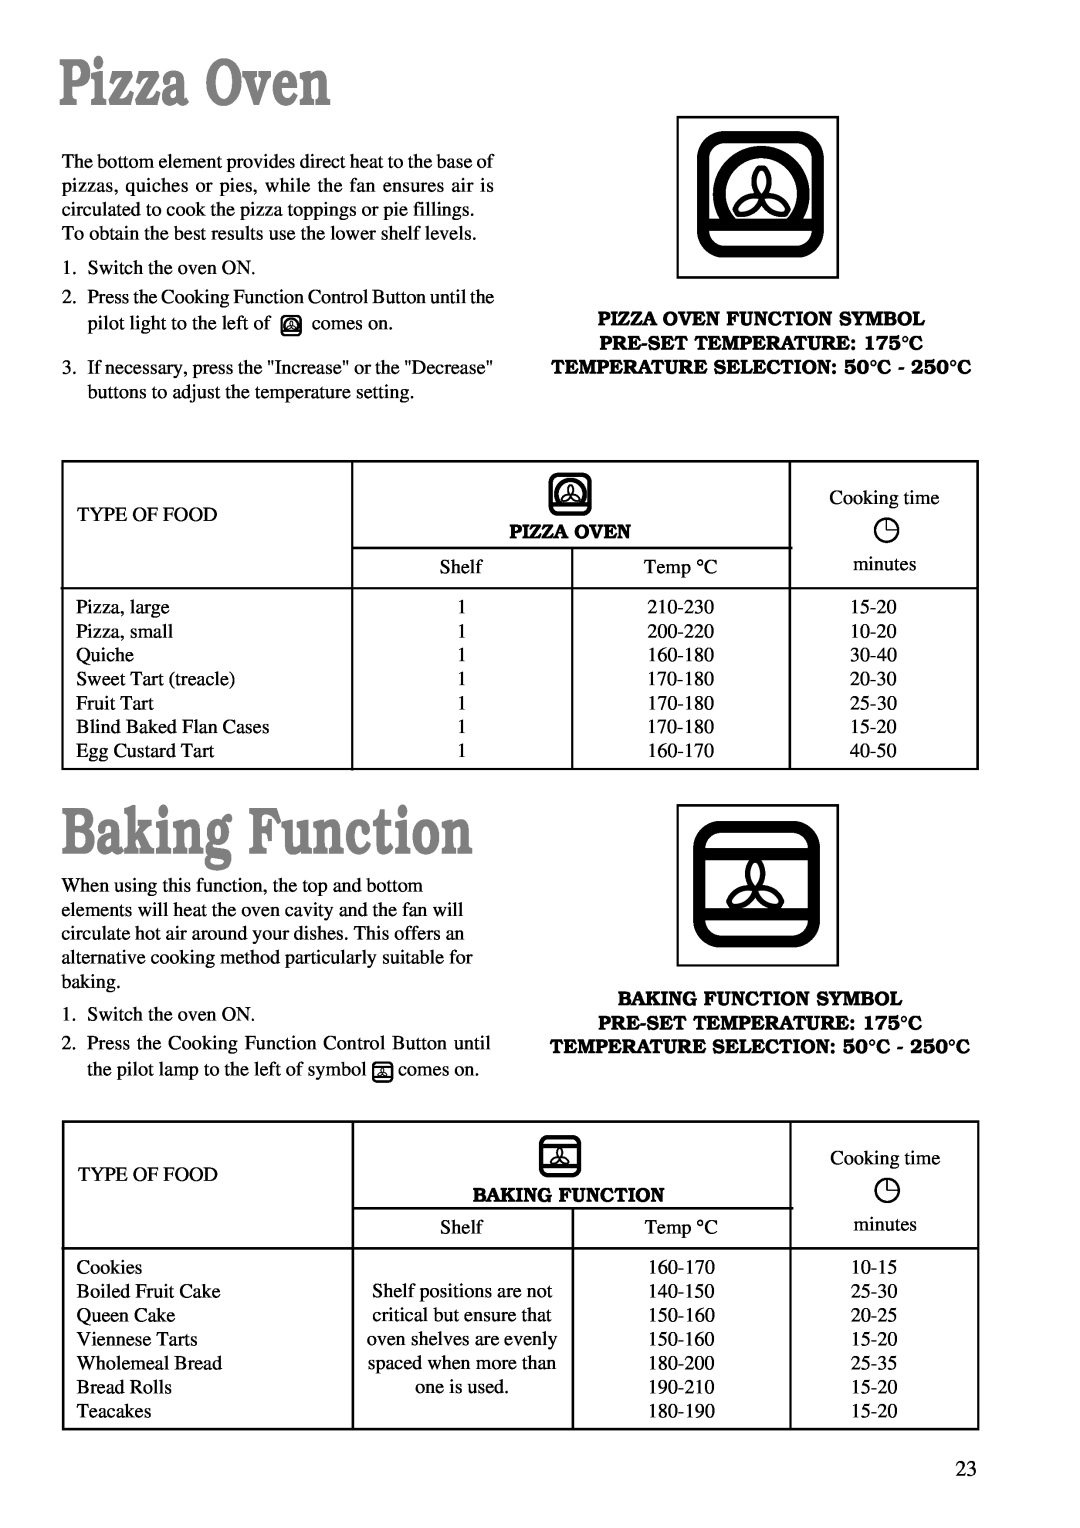 Zanussi ZBM 878 manual Pizza Oven, Baking Function, BAKING FUNCTION SYMBOL PRE-SET TEMPERATURE 175C 